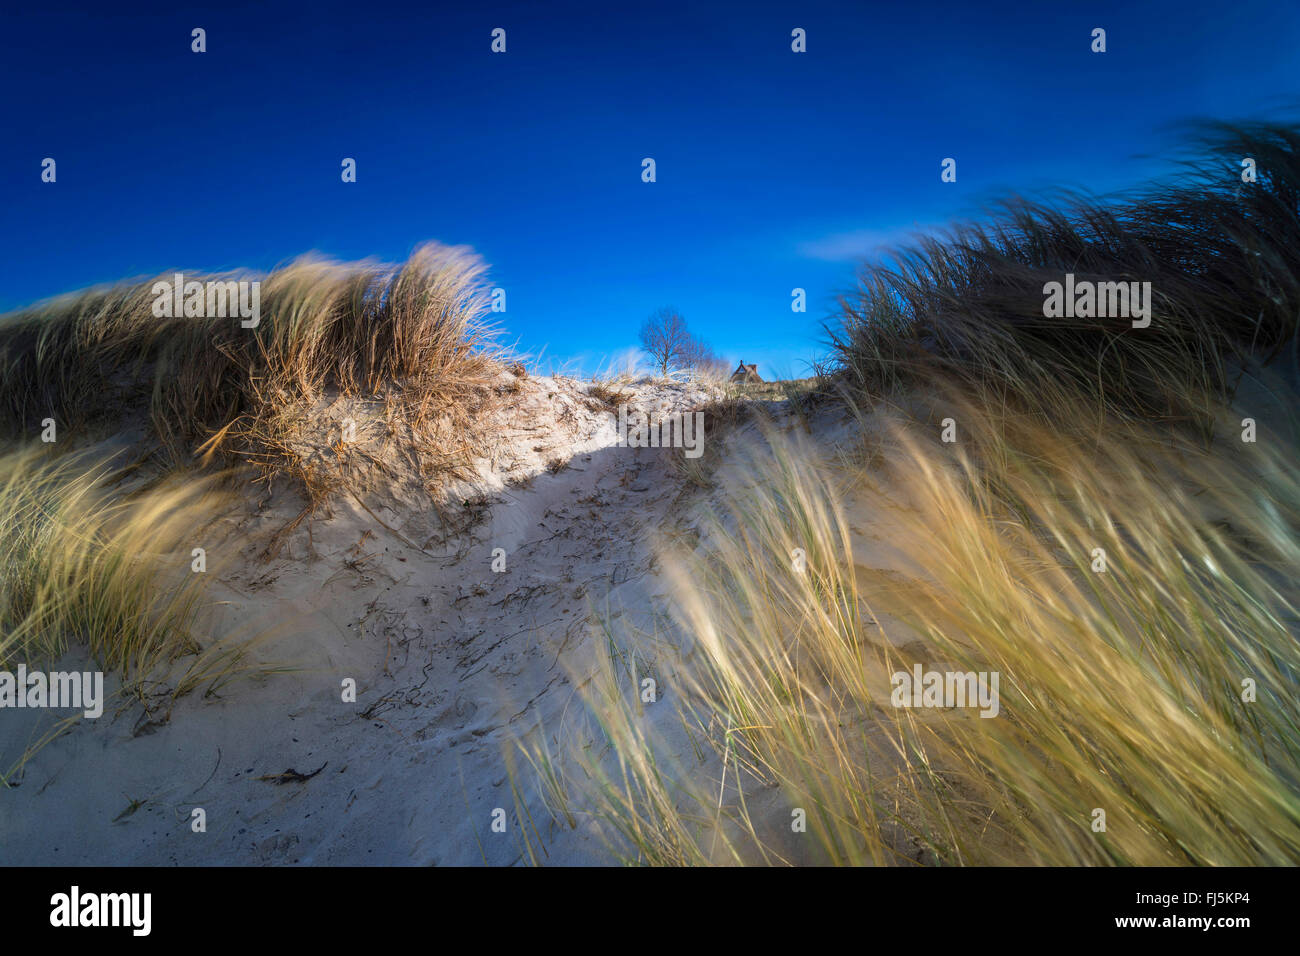 grass-grown dune in the wind, Germany, Mecklenburg-Western Pomerania, Darss, Prerow Stock Photo